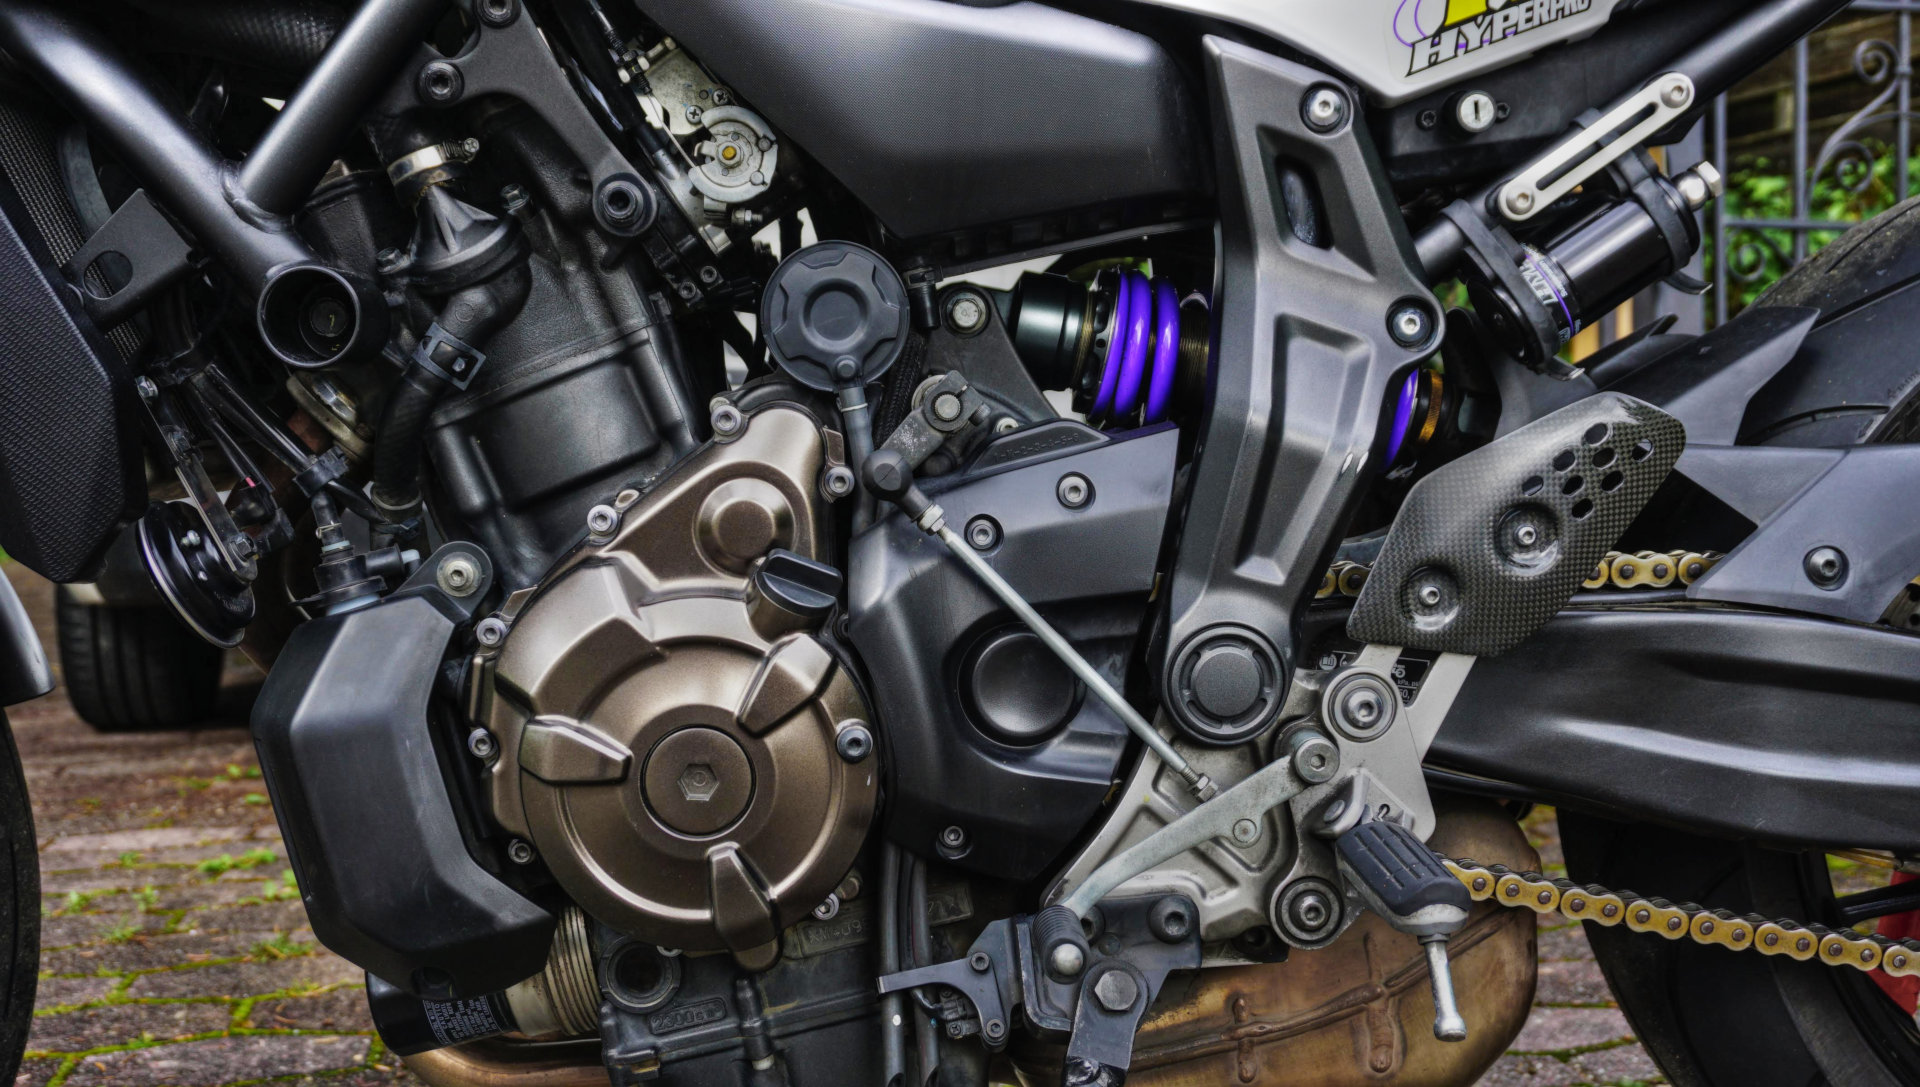 Yamaha MT-07 Modell 2017, Motor links